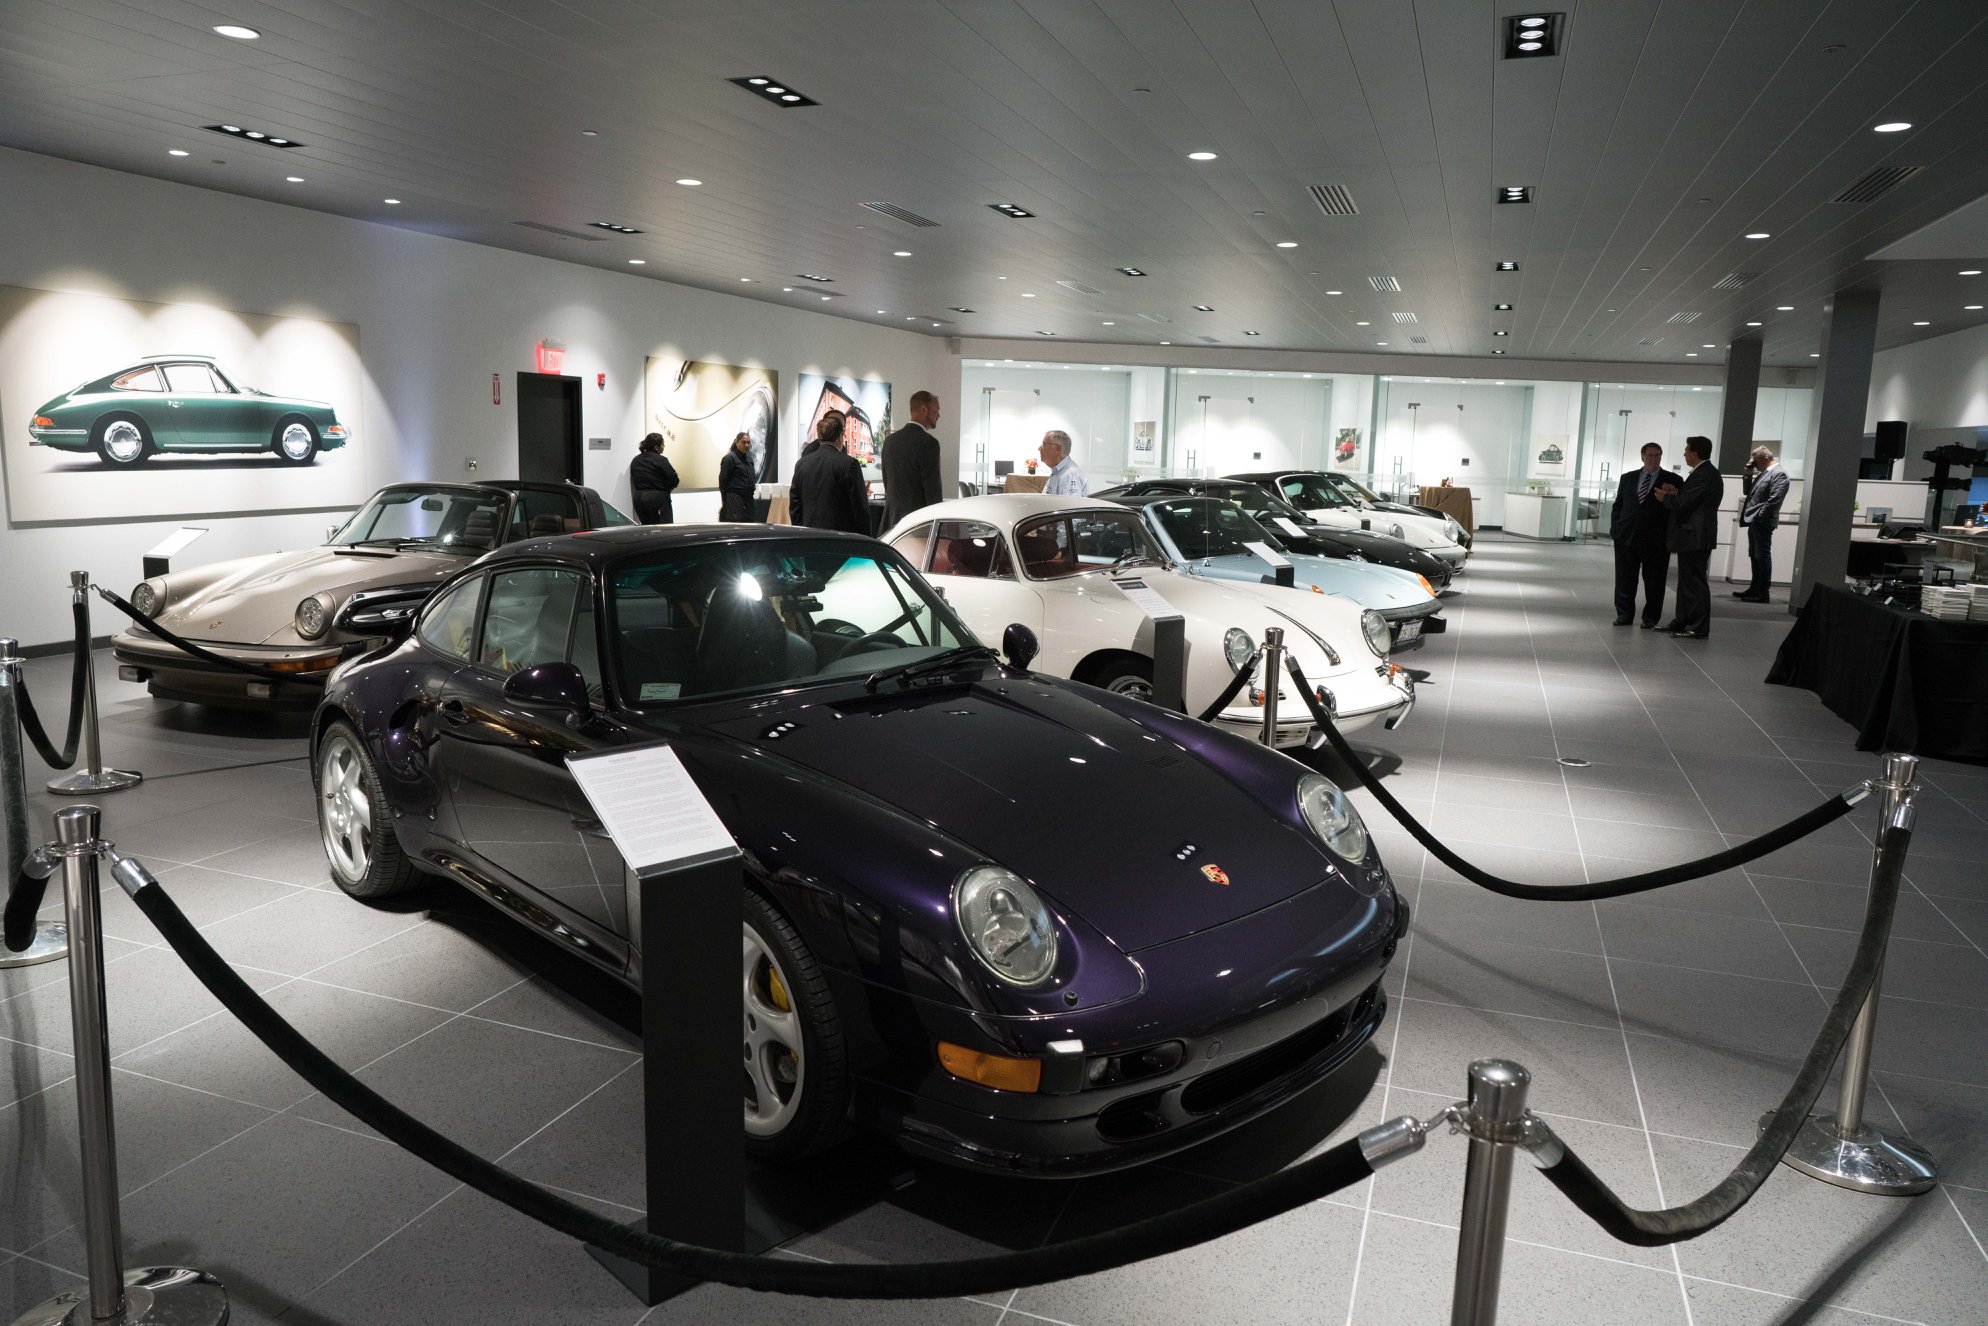 Napleton Westmont Porsche Classic Showroom